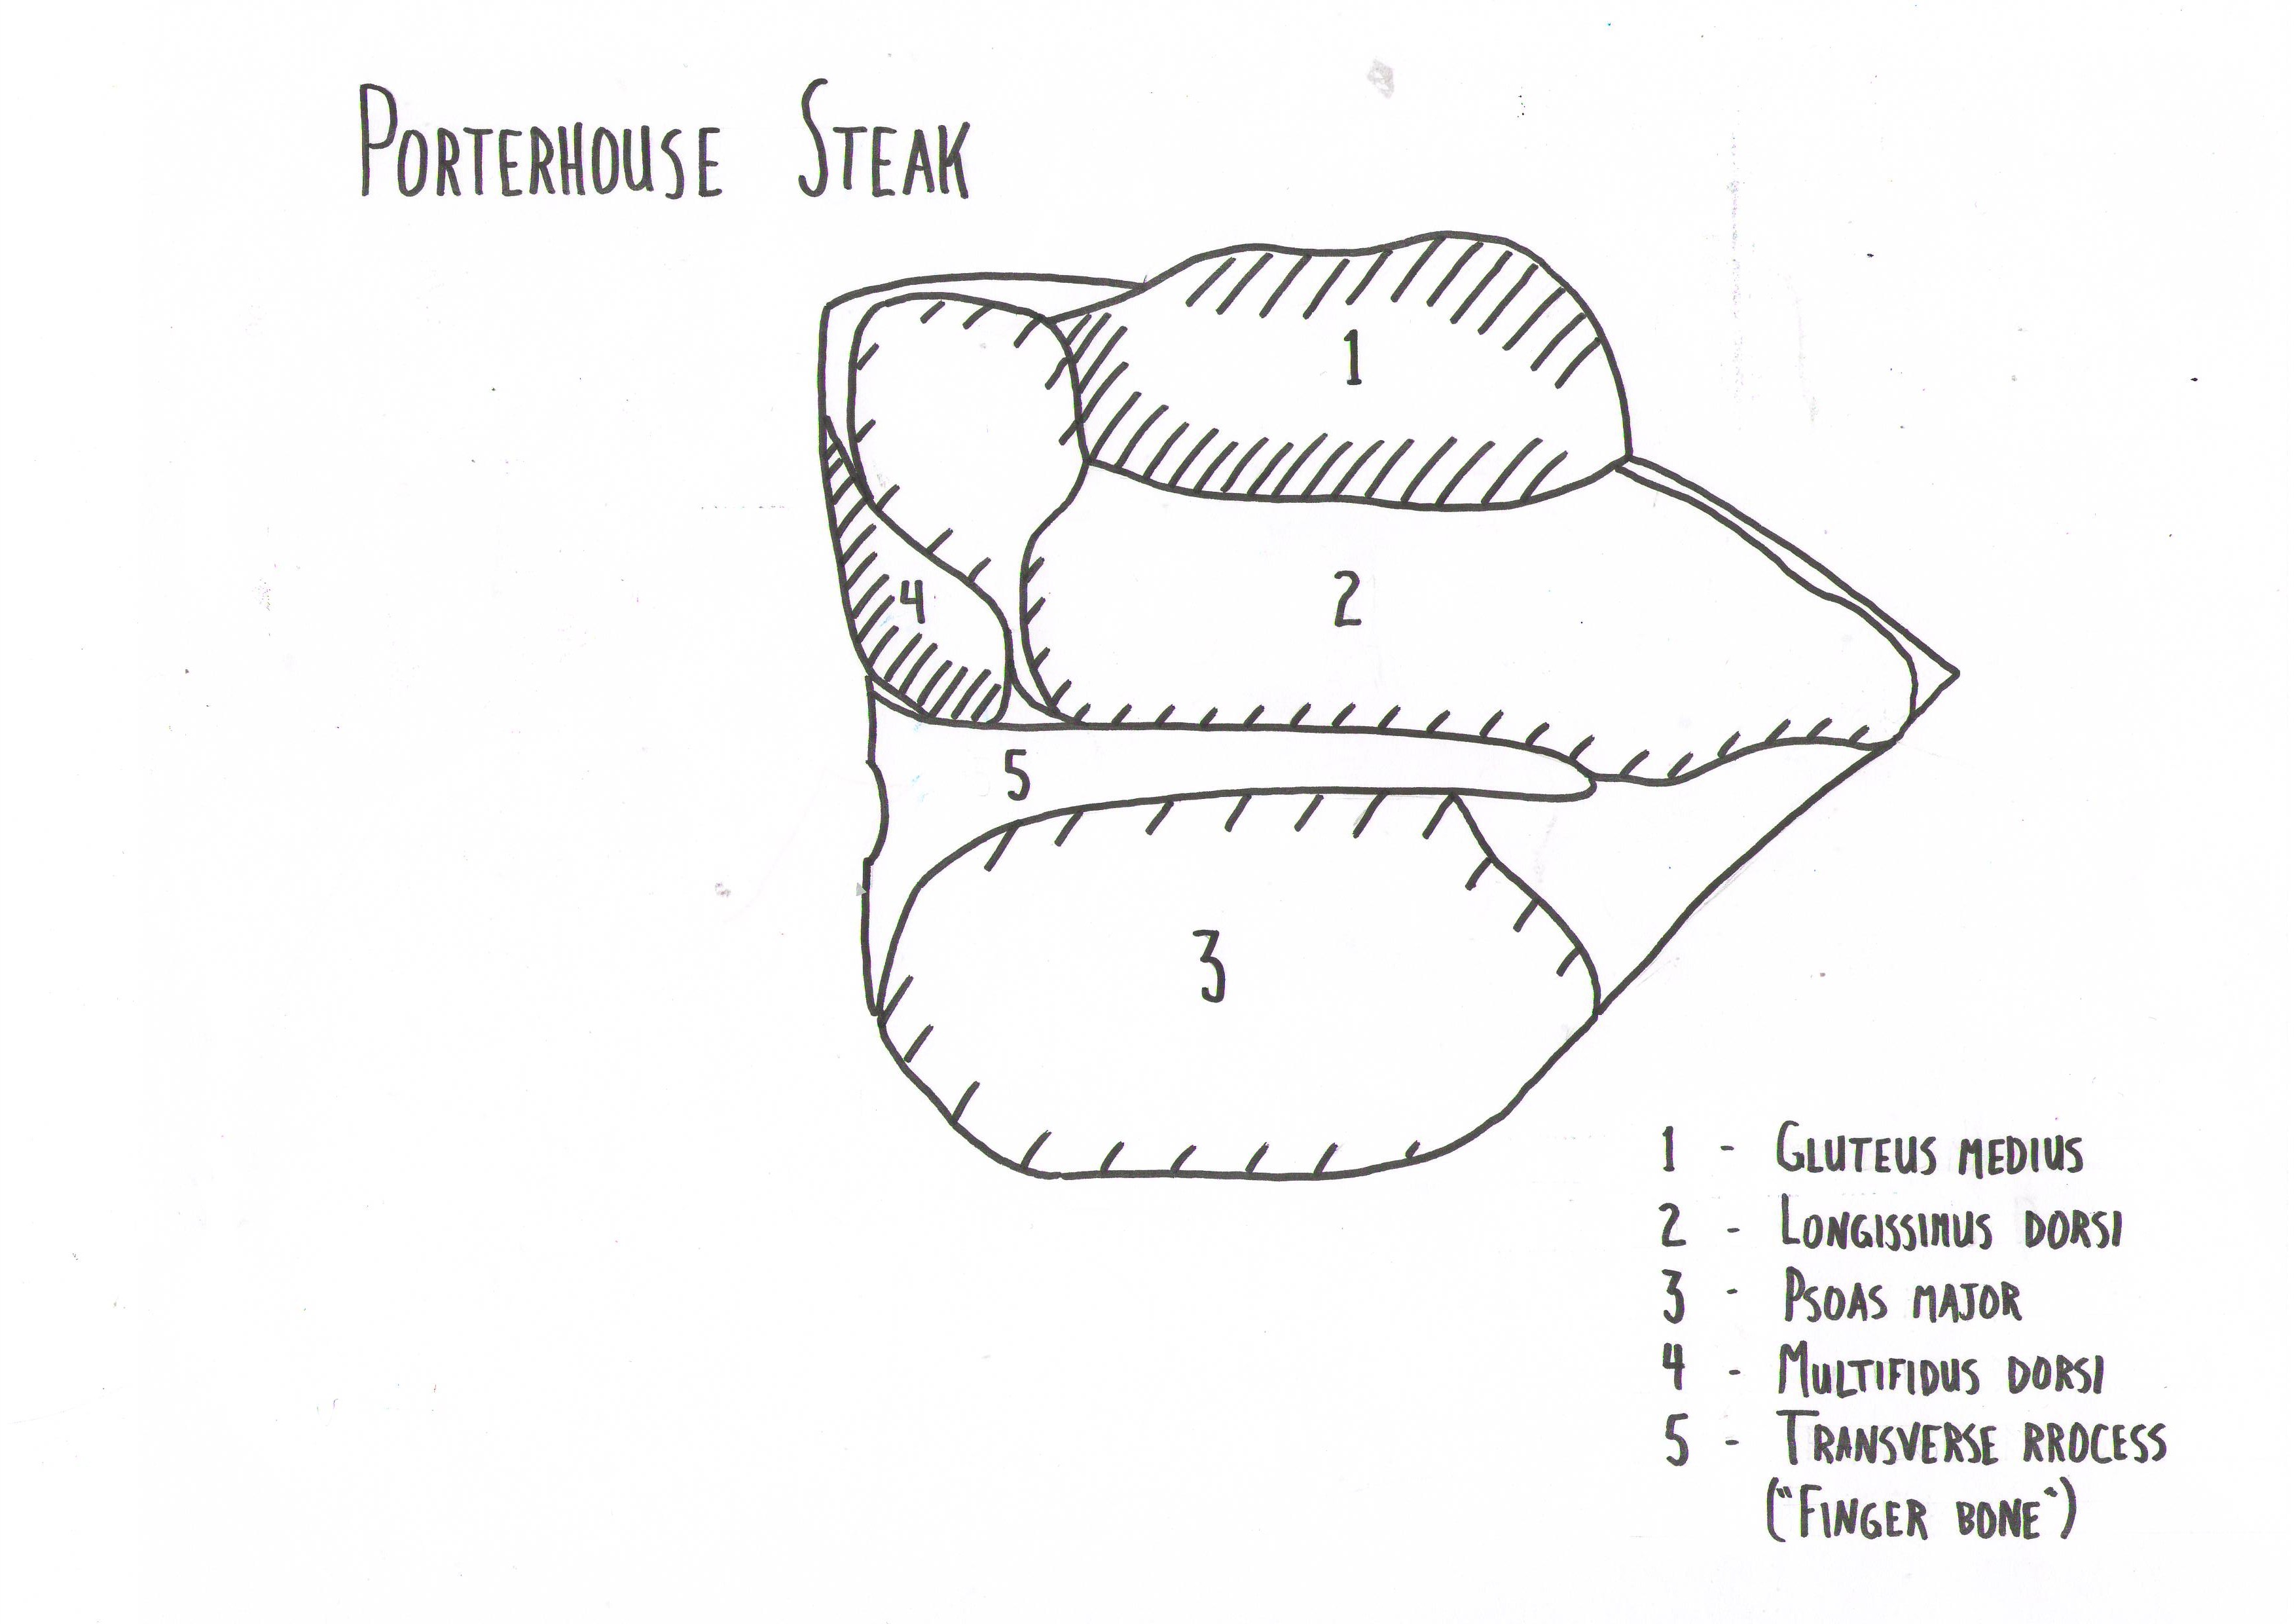 A super high-def image of a Porterhouse steak